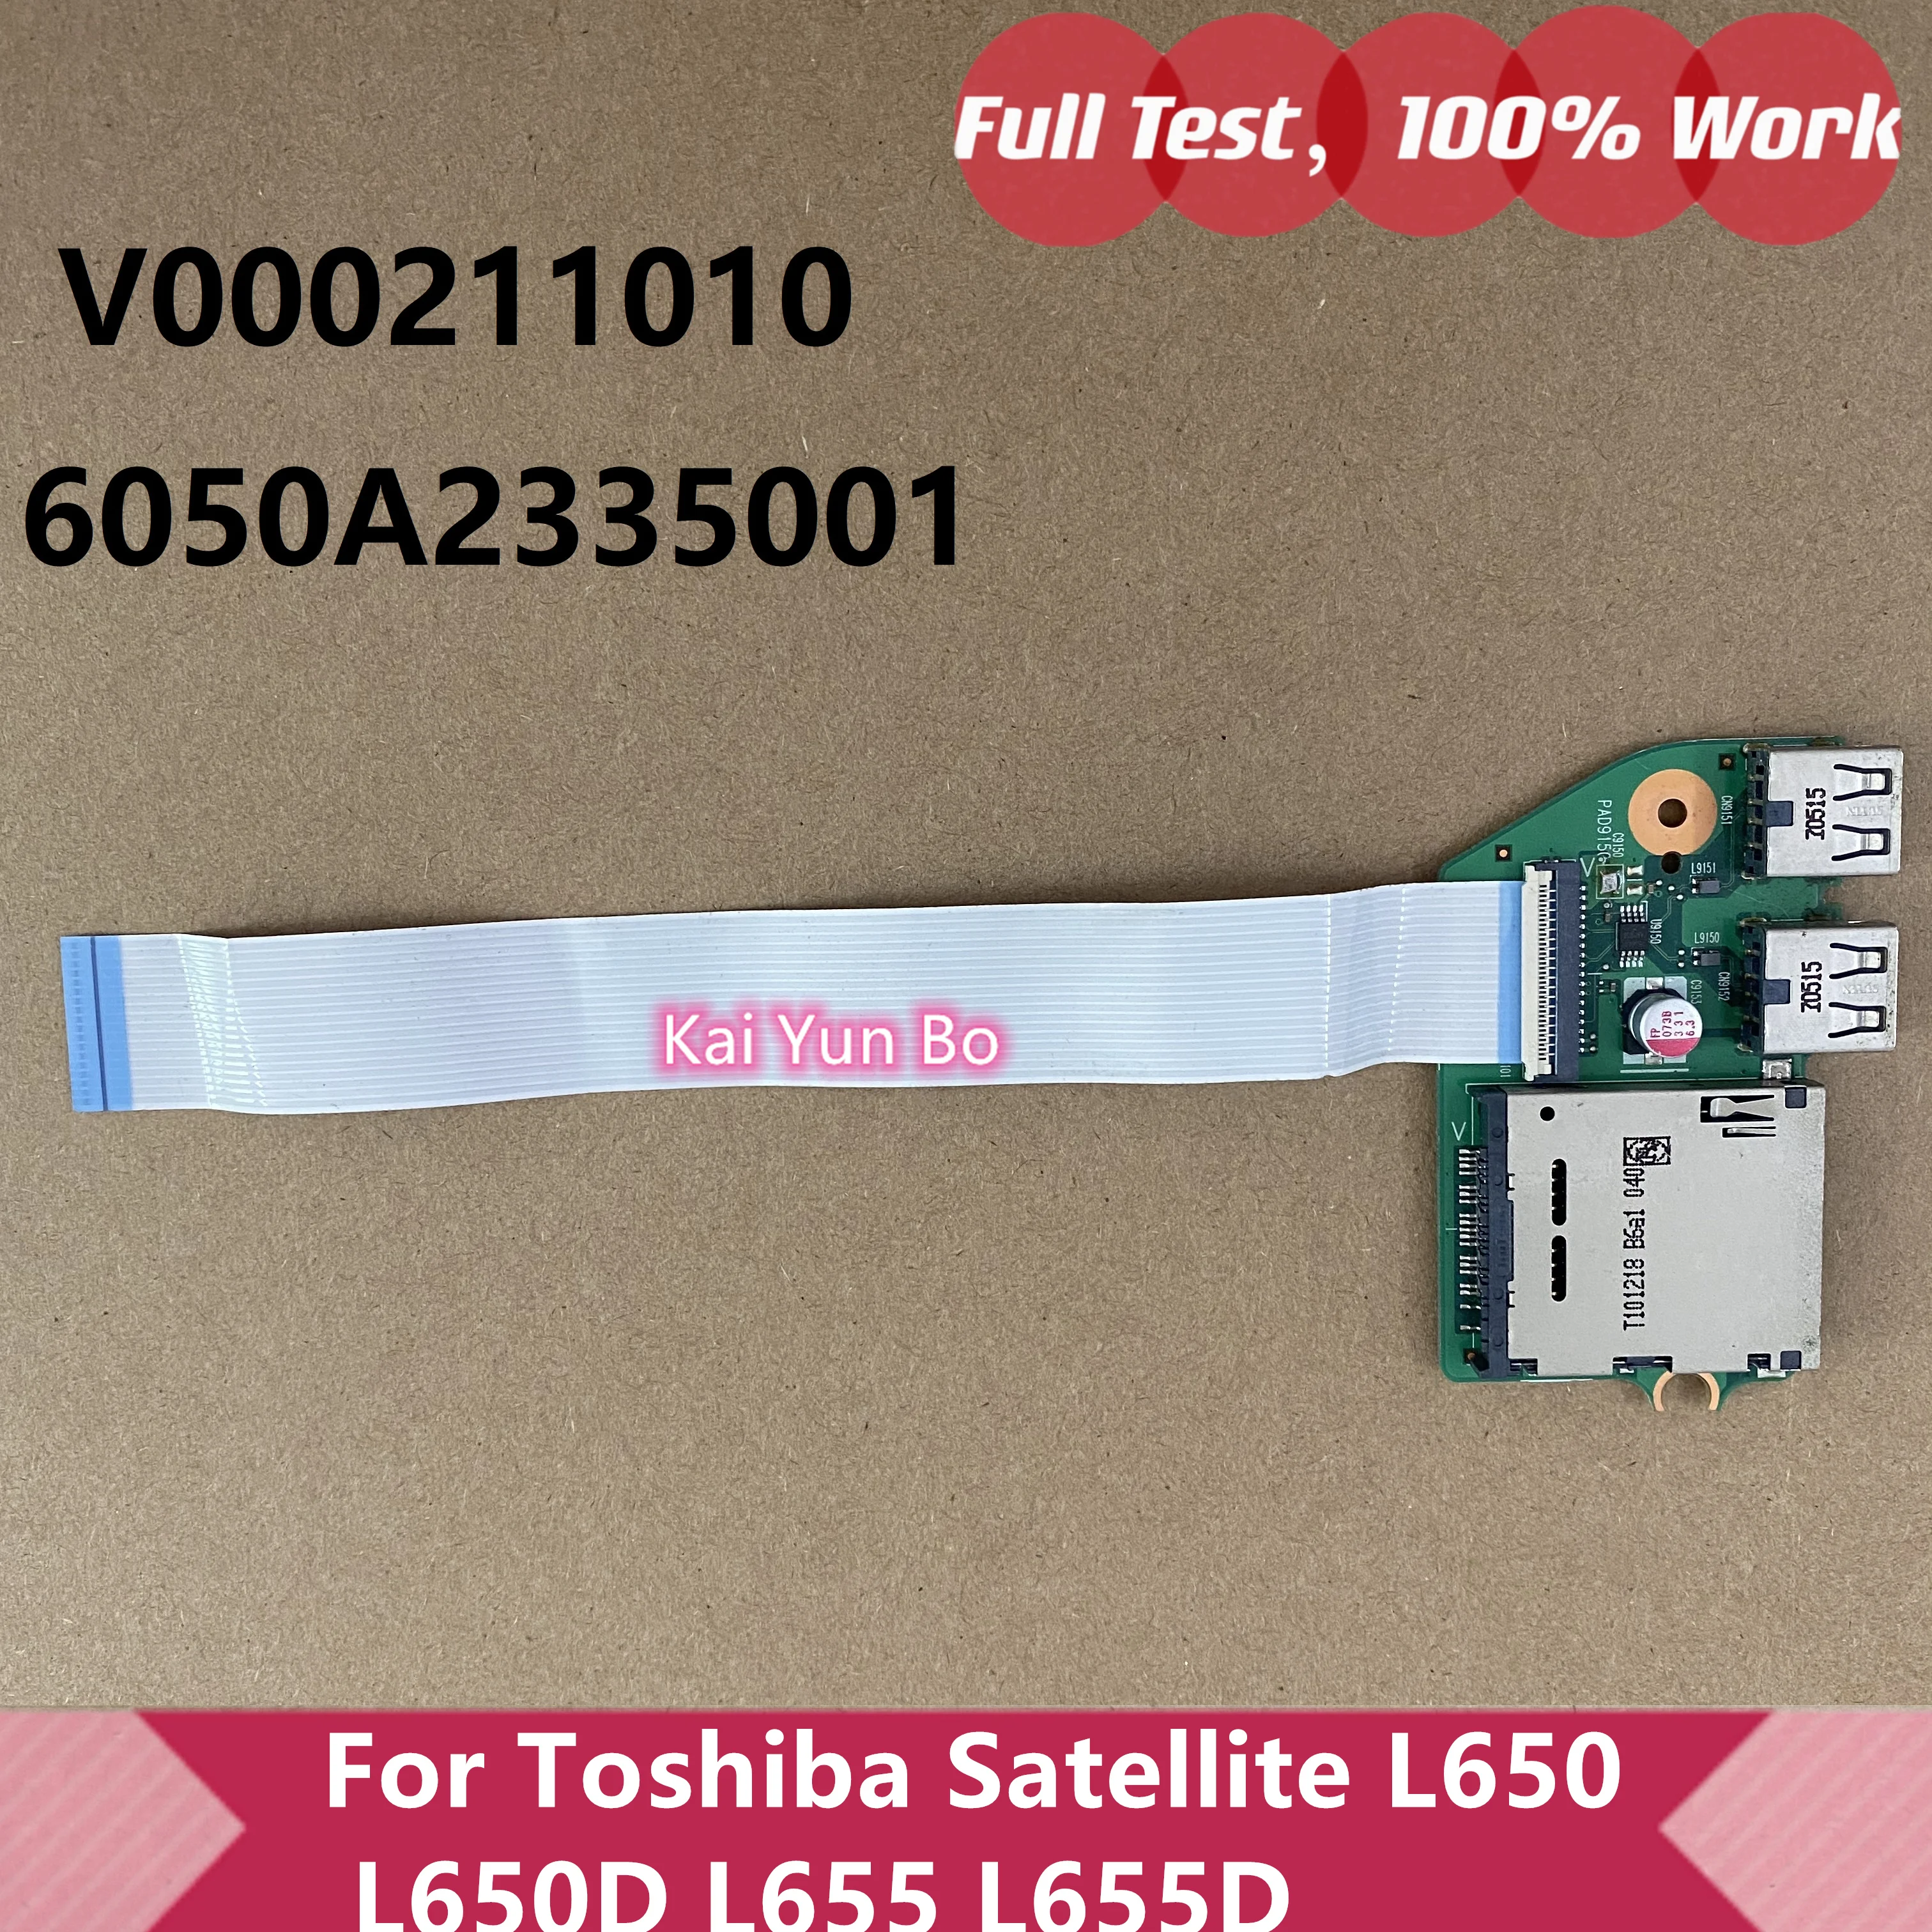 

Genuine For Toshiba Satellite L650 L650D L655 L655D Laptop USB SD Card Reader Board w Cable V000211010 6050A2335001